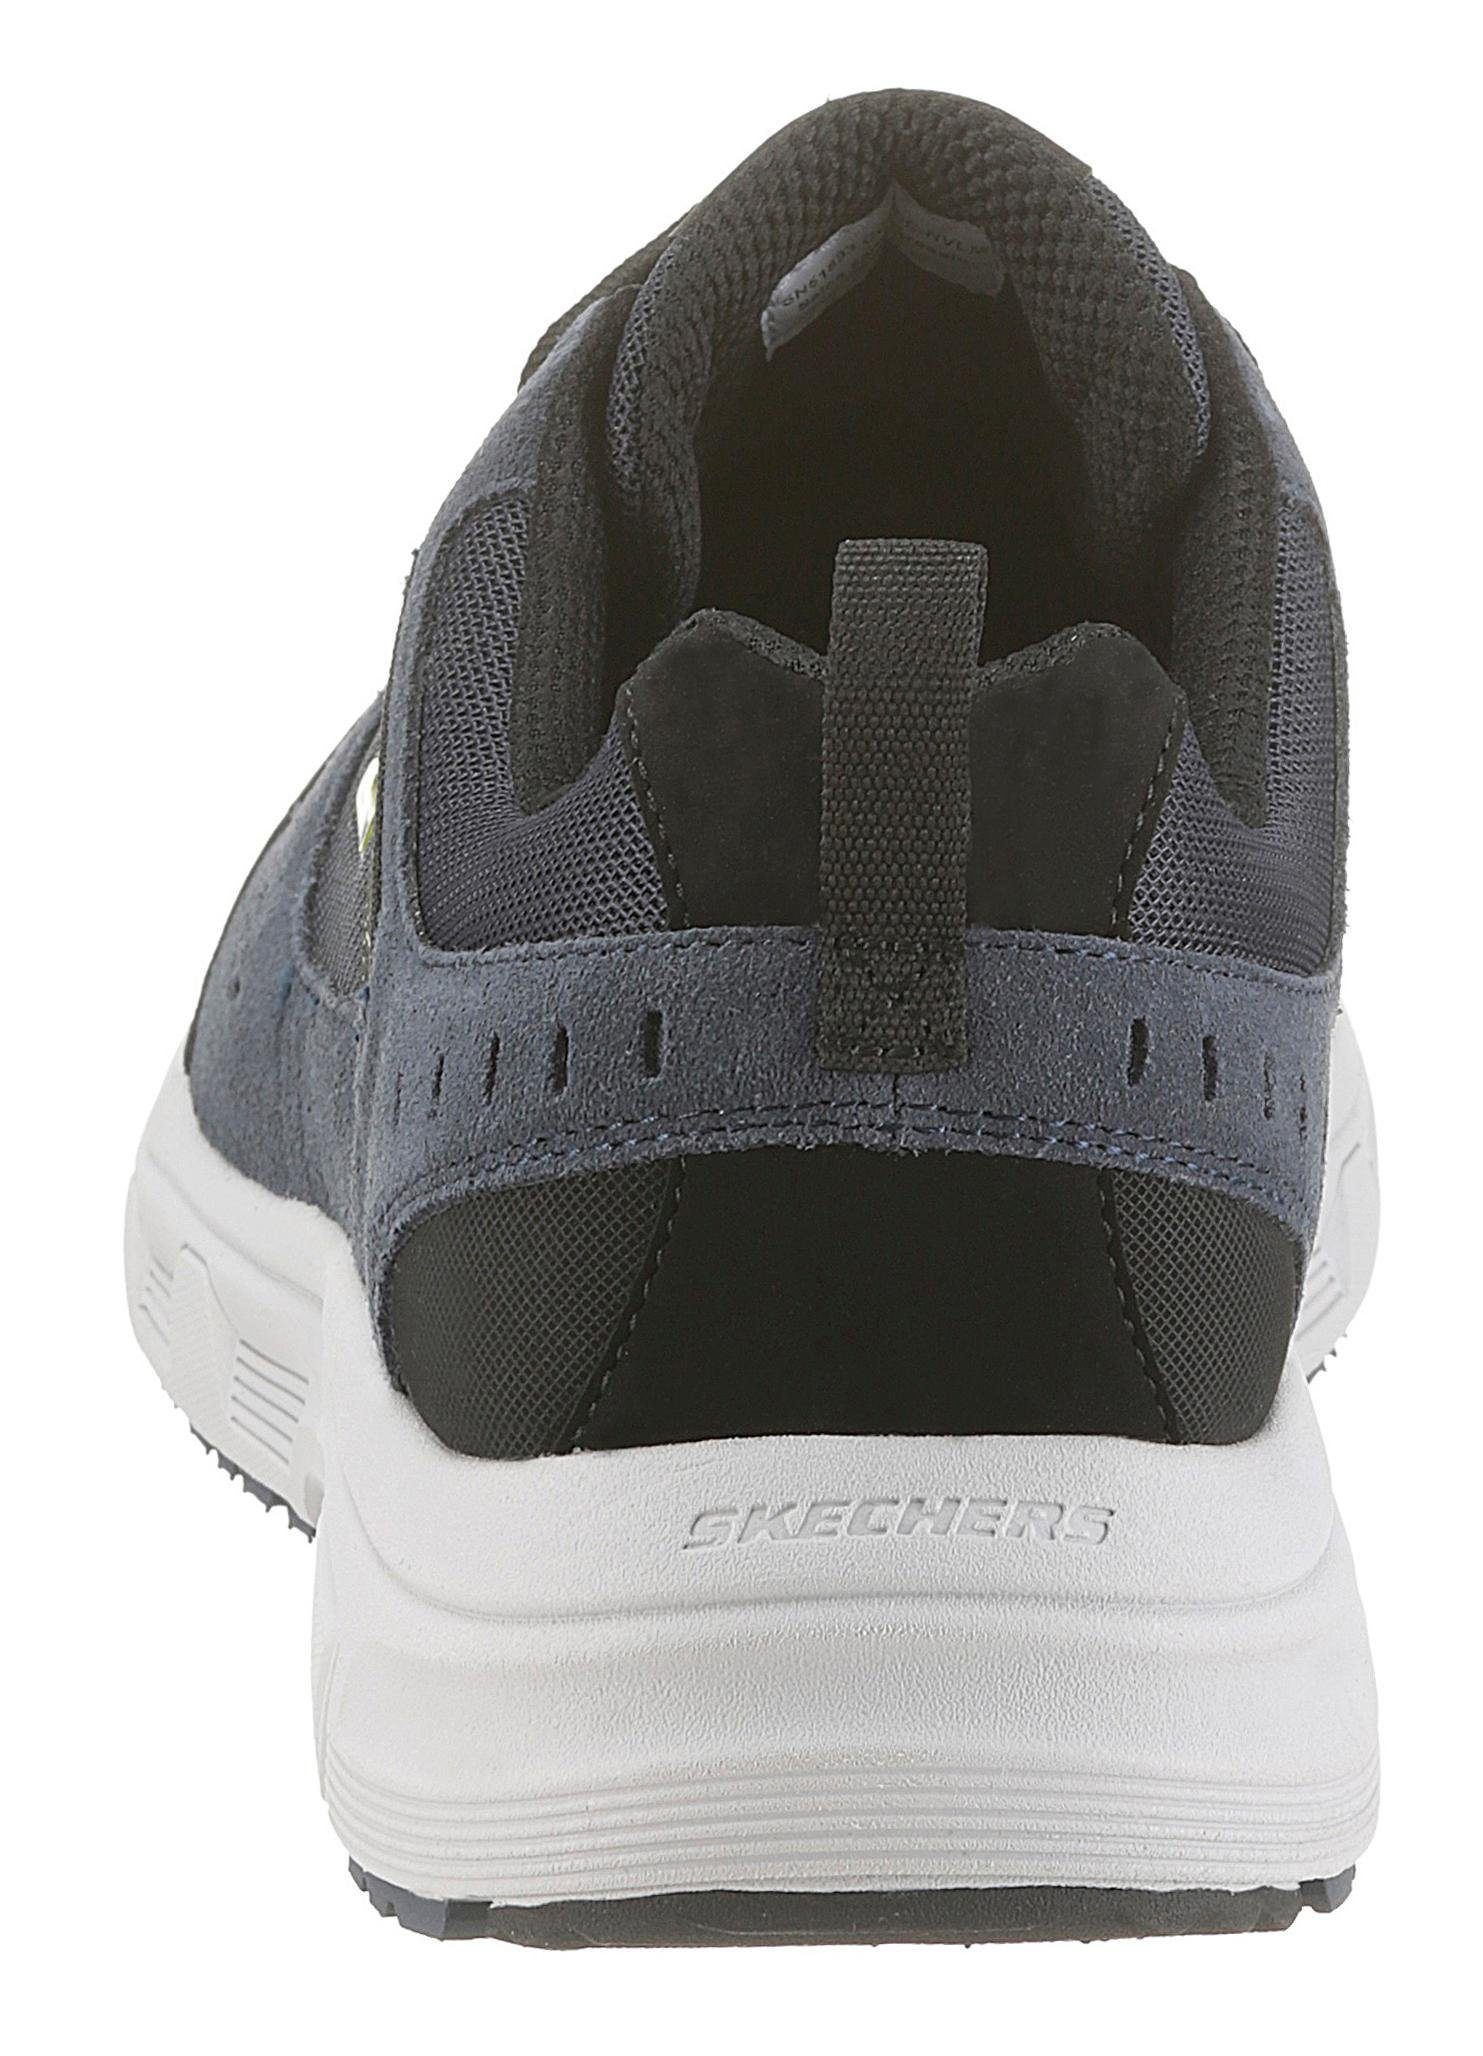 Sneaker schwarz bequemer Oak Skechers navy Canyon Foam-Ausstattung mit Memory